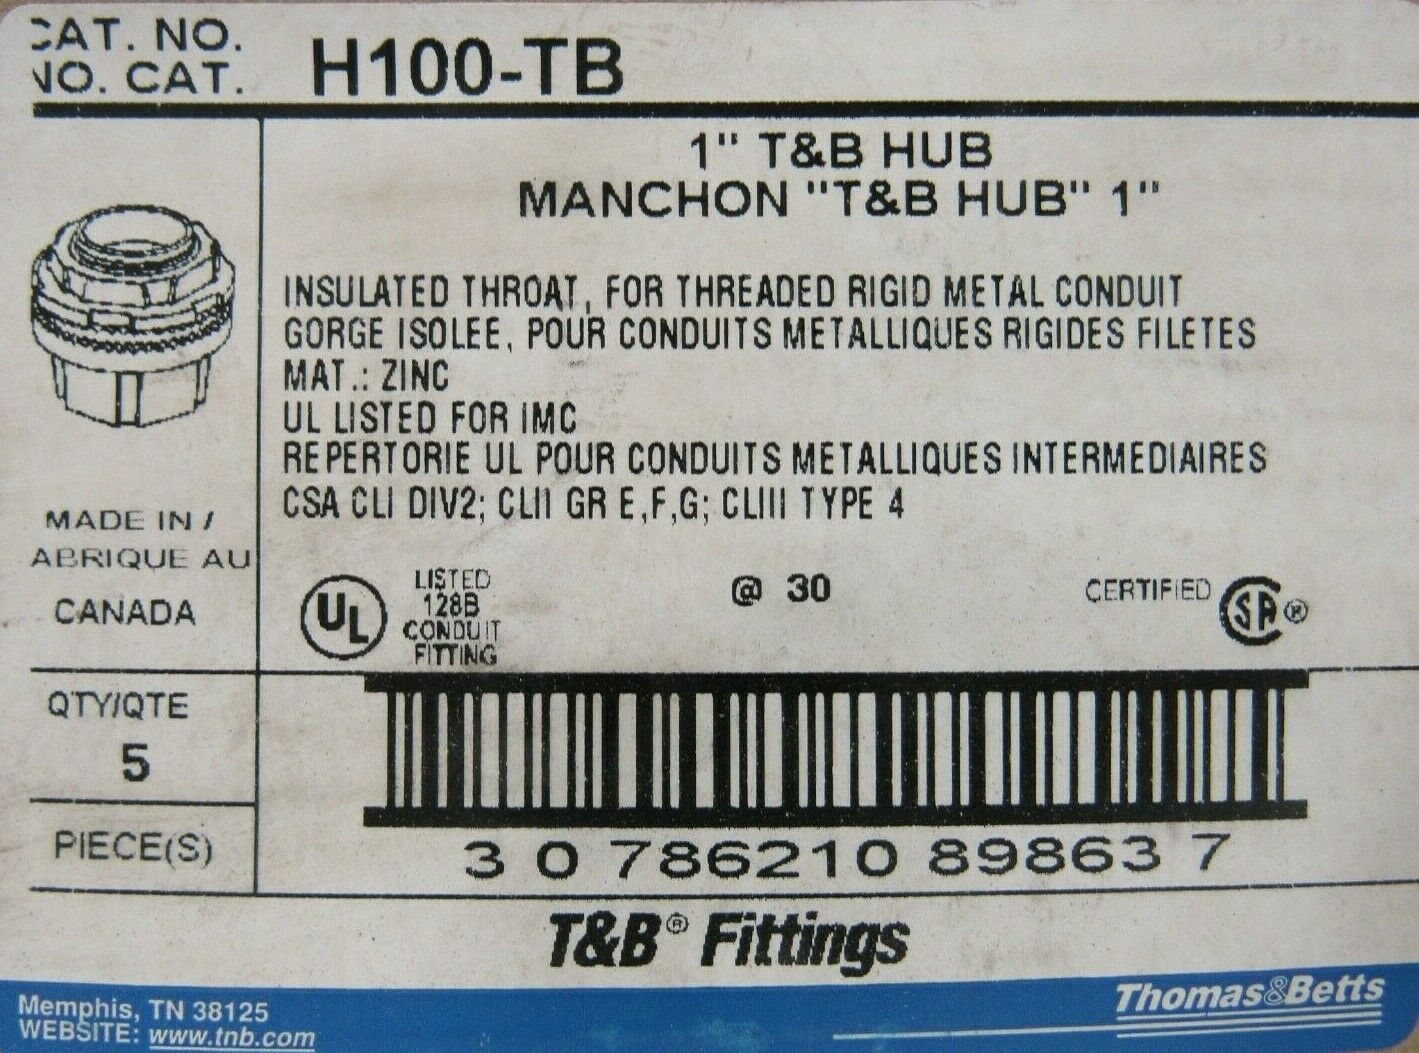 NEW LOT OF 5 BOX  T&B THOMAS & BETTS MANCHON HUB H100-TB 1" CSW